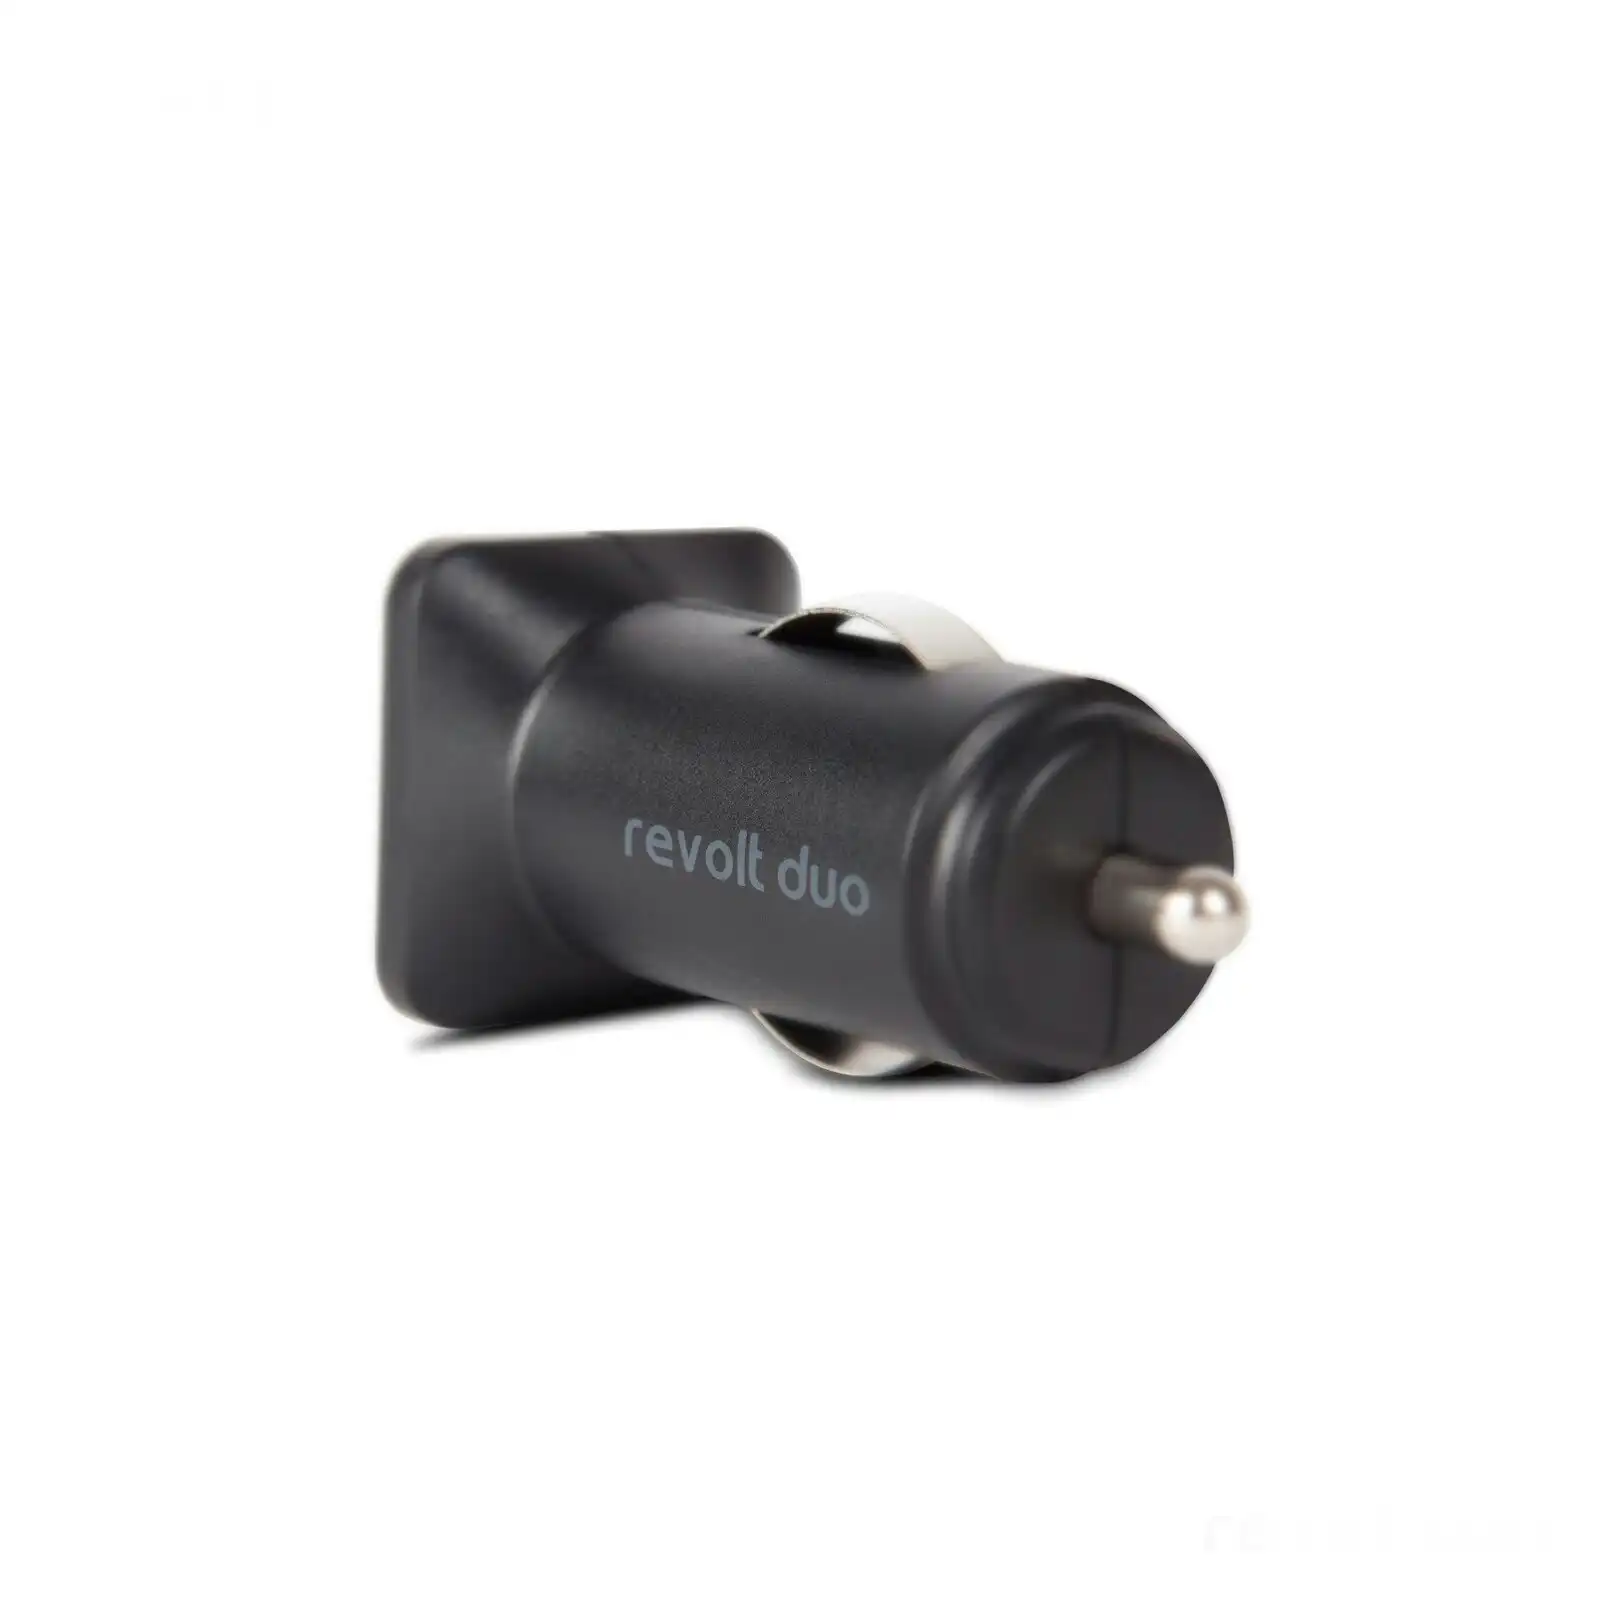 Moshi Revolt Duo Dual 2.1A Car Cigarette Lighter Charger Adapter for Phones BLK